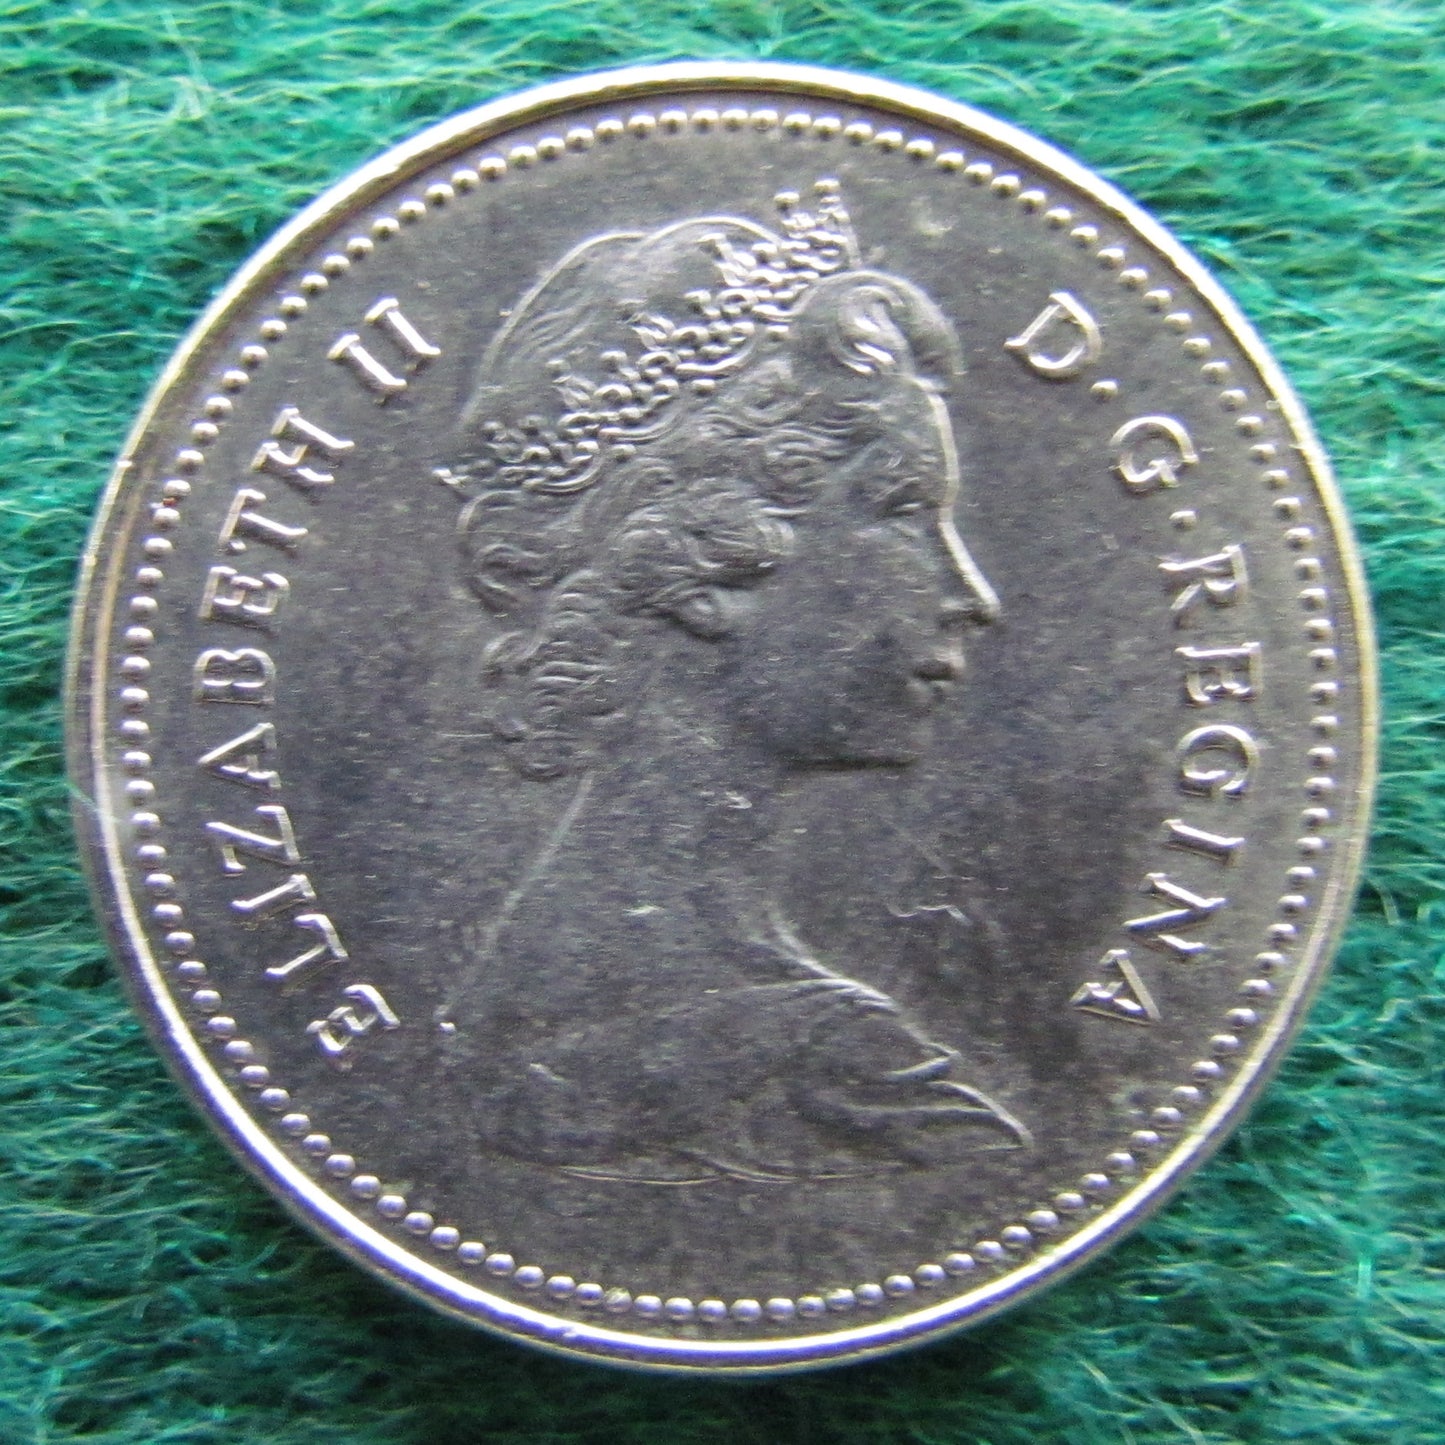 Canada 1981 5 Cent Queen Elizabeth II Coin - Circulated